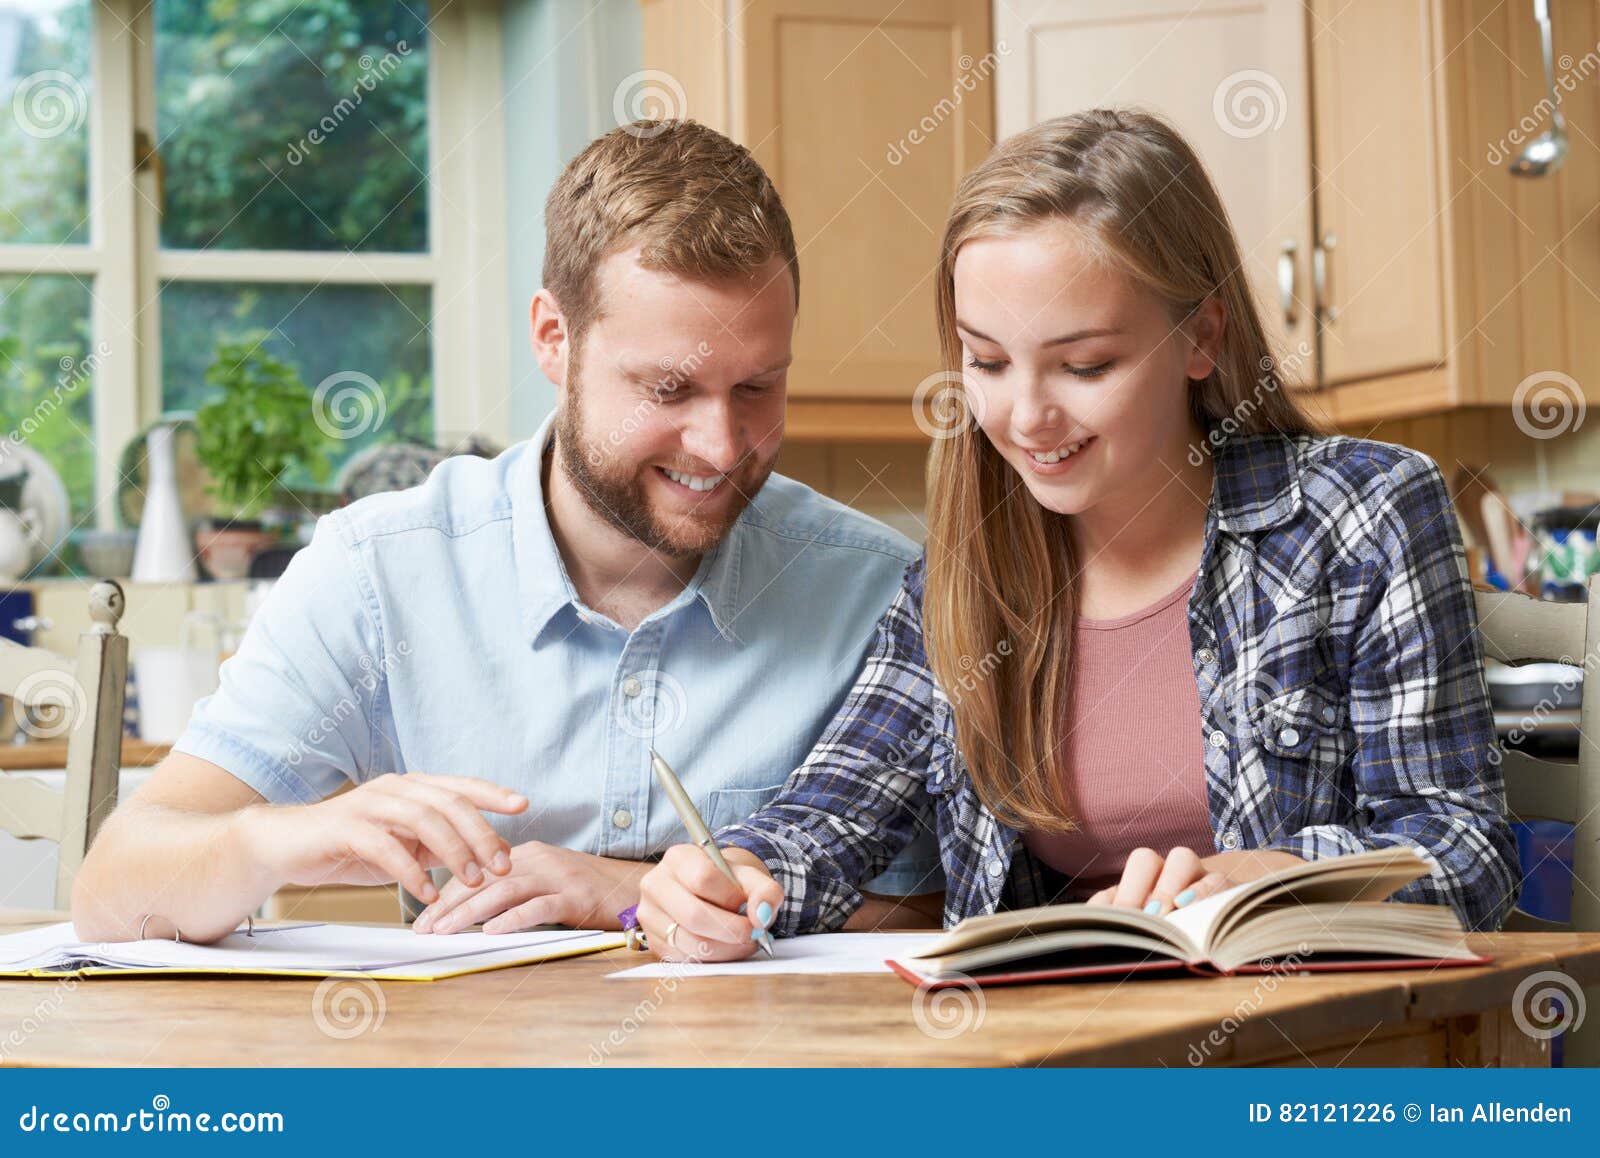 male home tutor helping teenage girl with studies